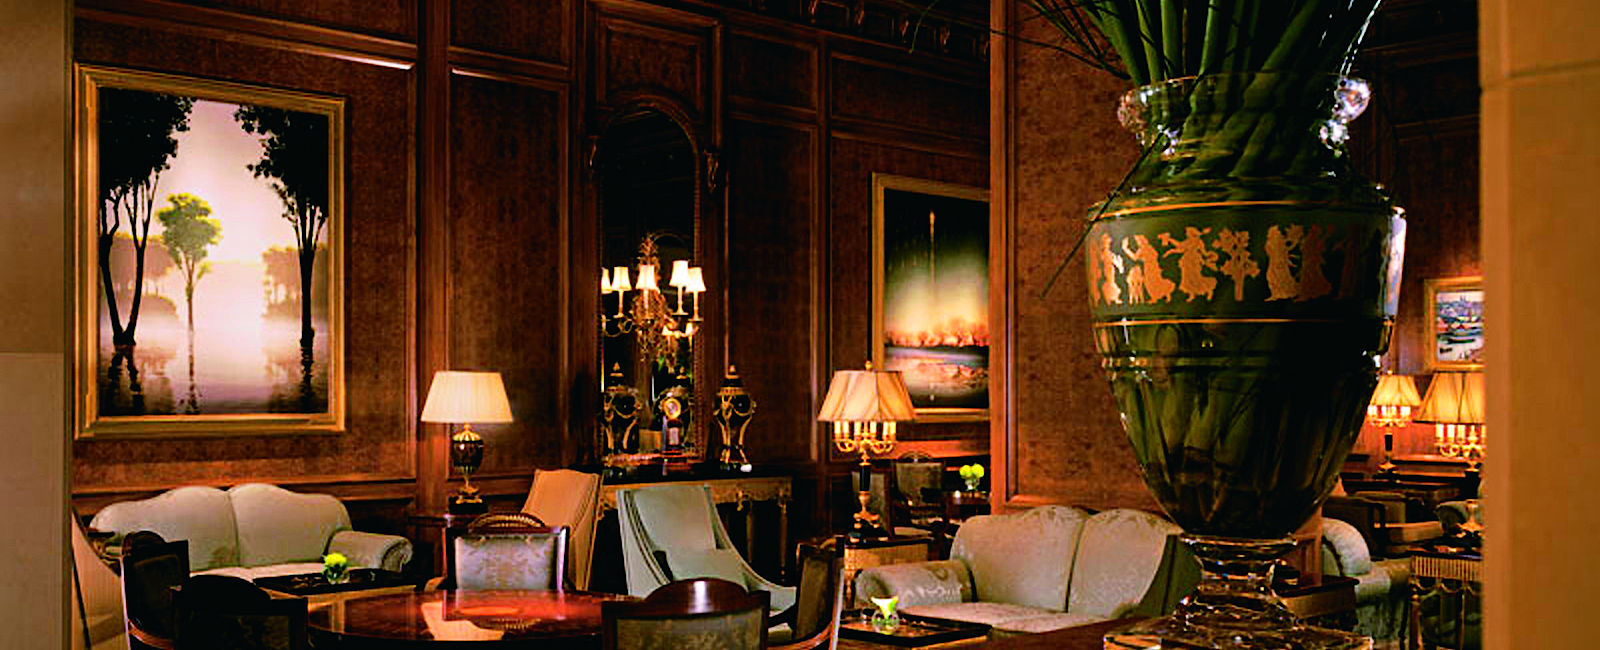 The Ritz-Carlton New York, Central Park - Connoisseur Circle Hoteltest